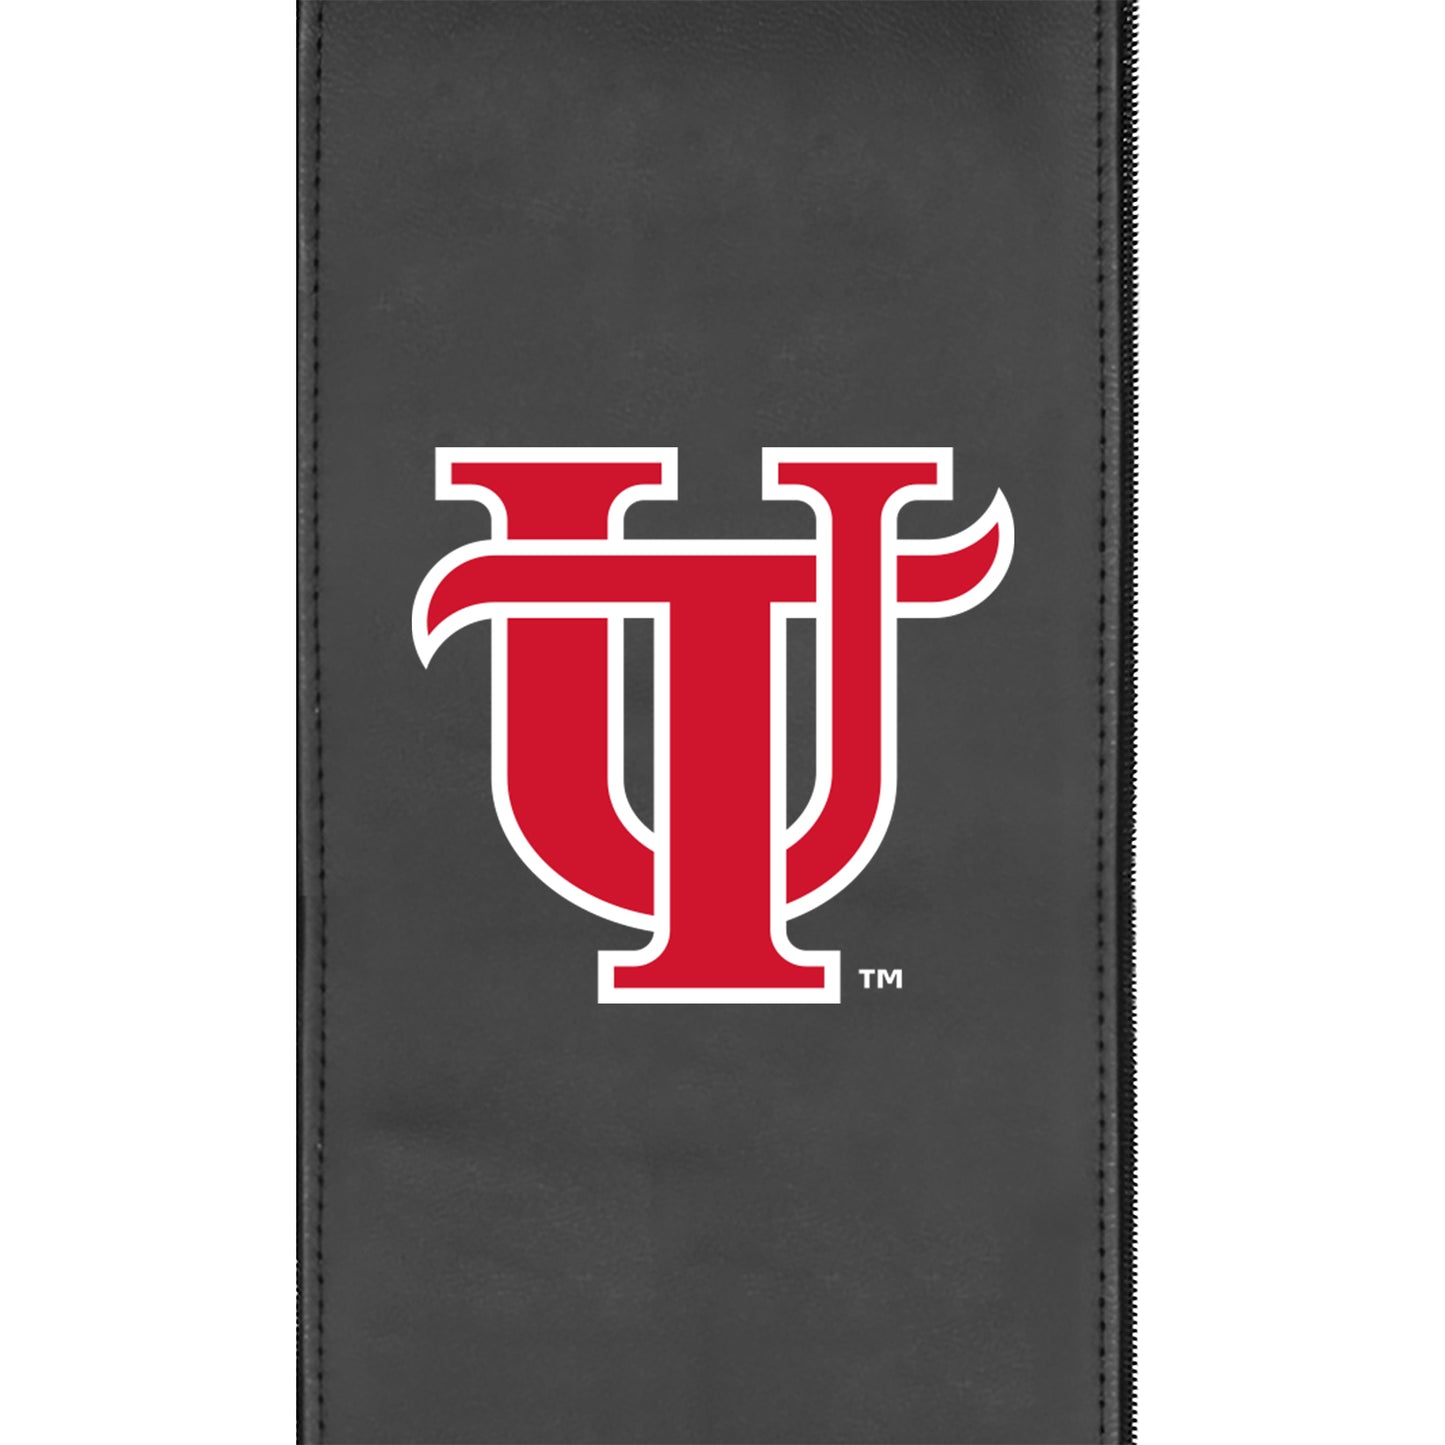 Tampa University Primary Red Logo Panel